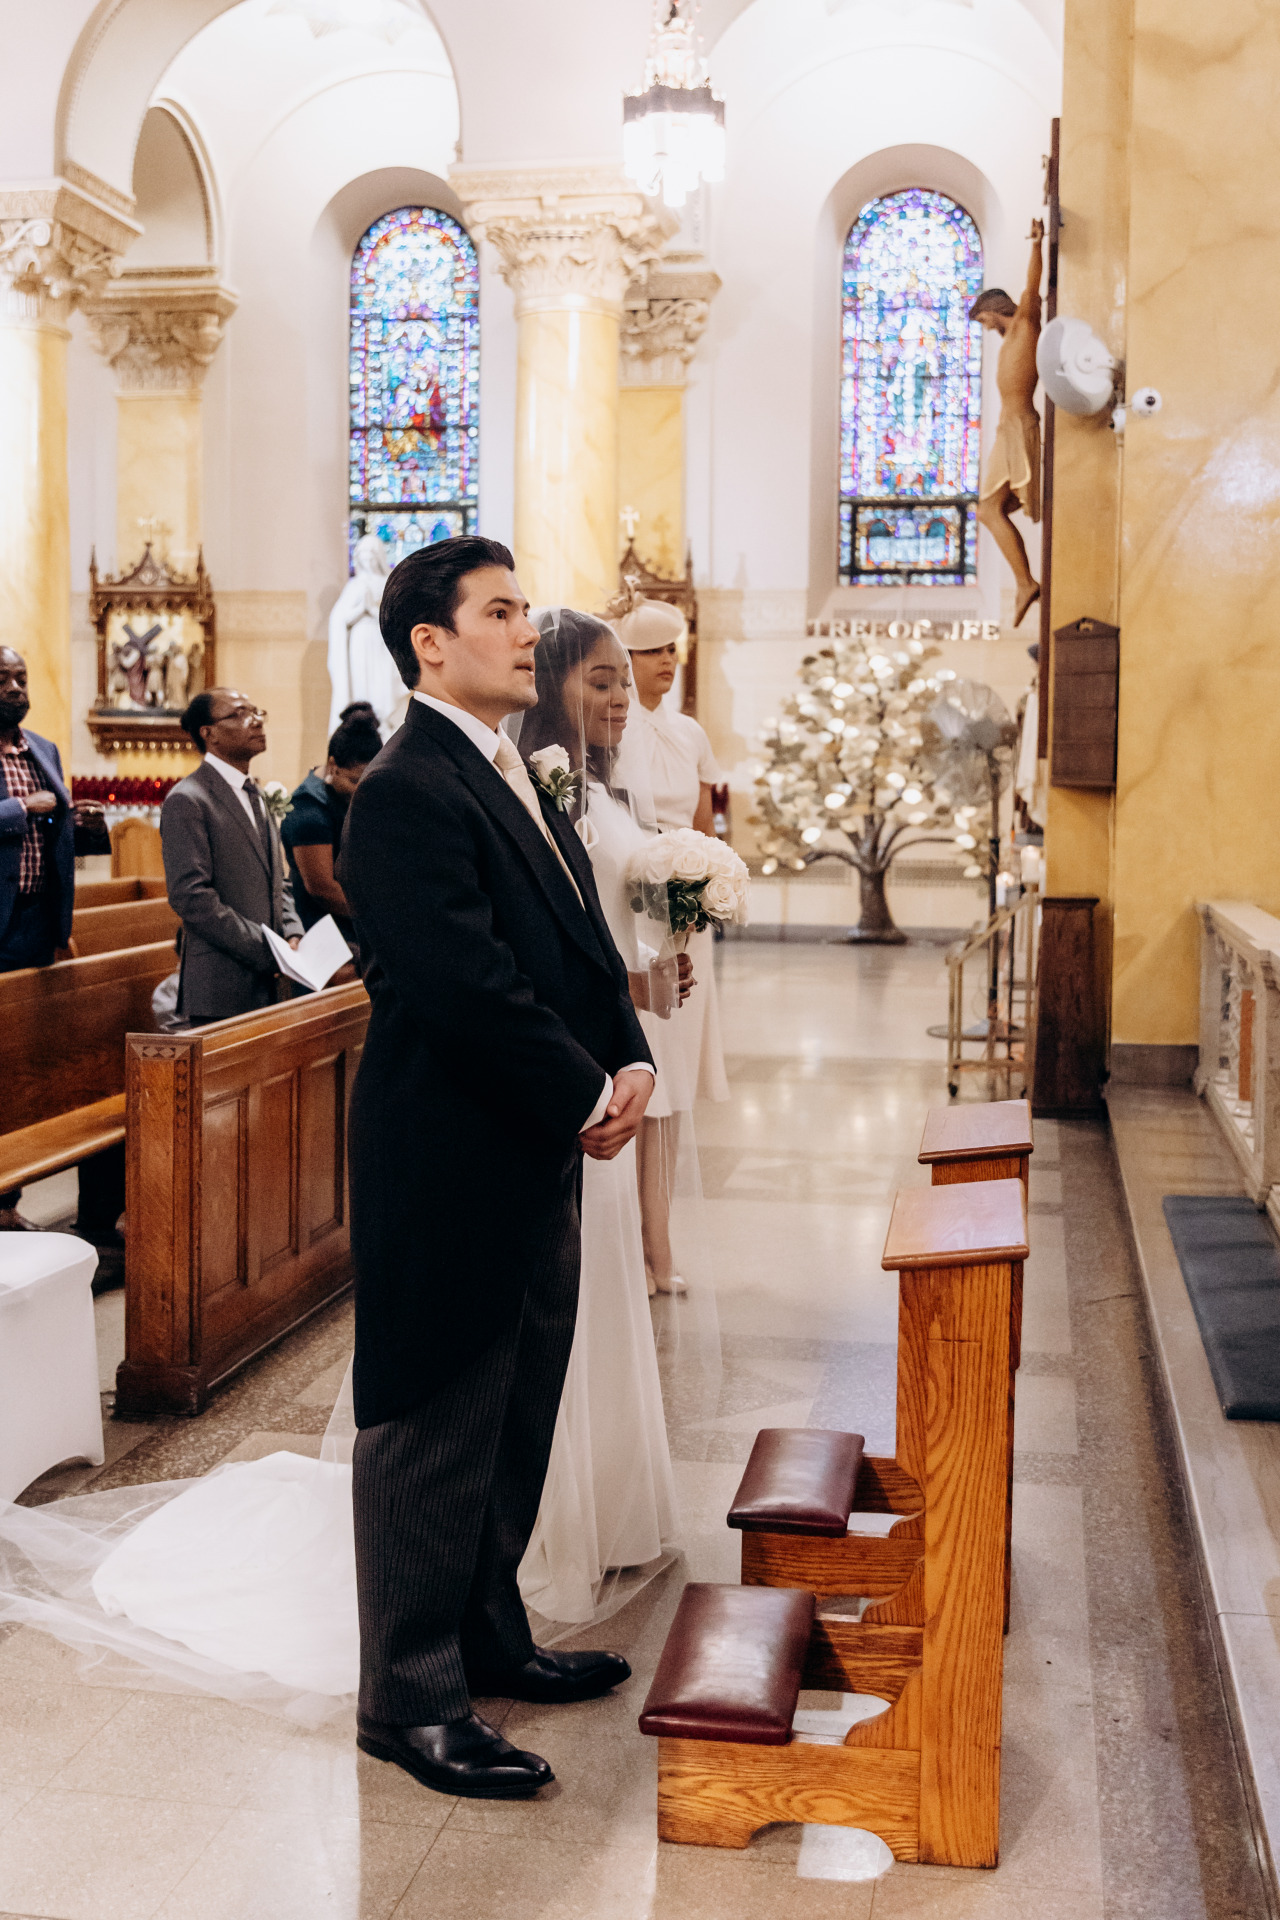 Catholic ceremony wedding in Jersey City New Jersey 8